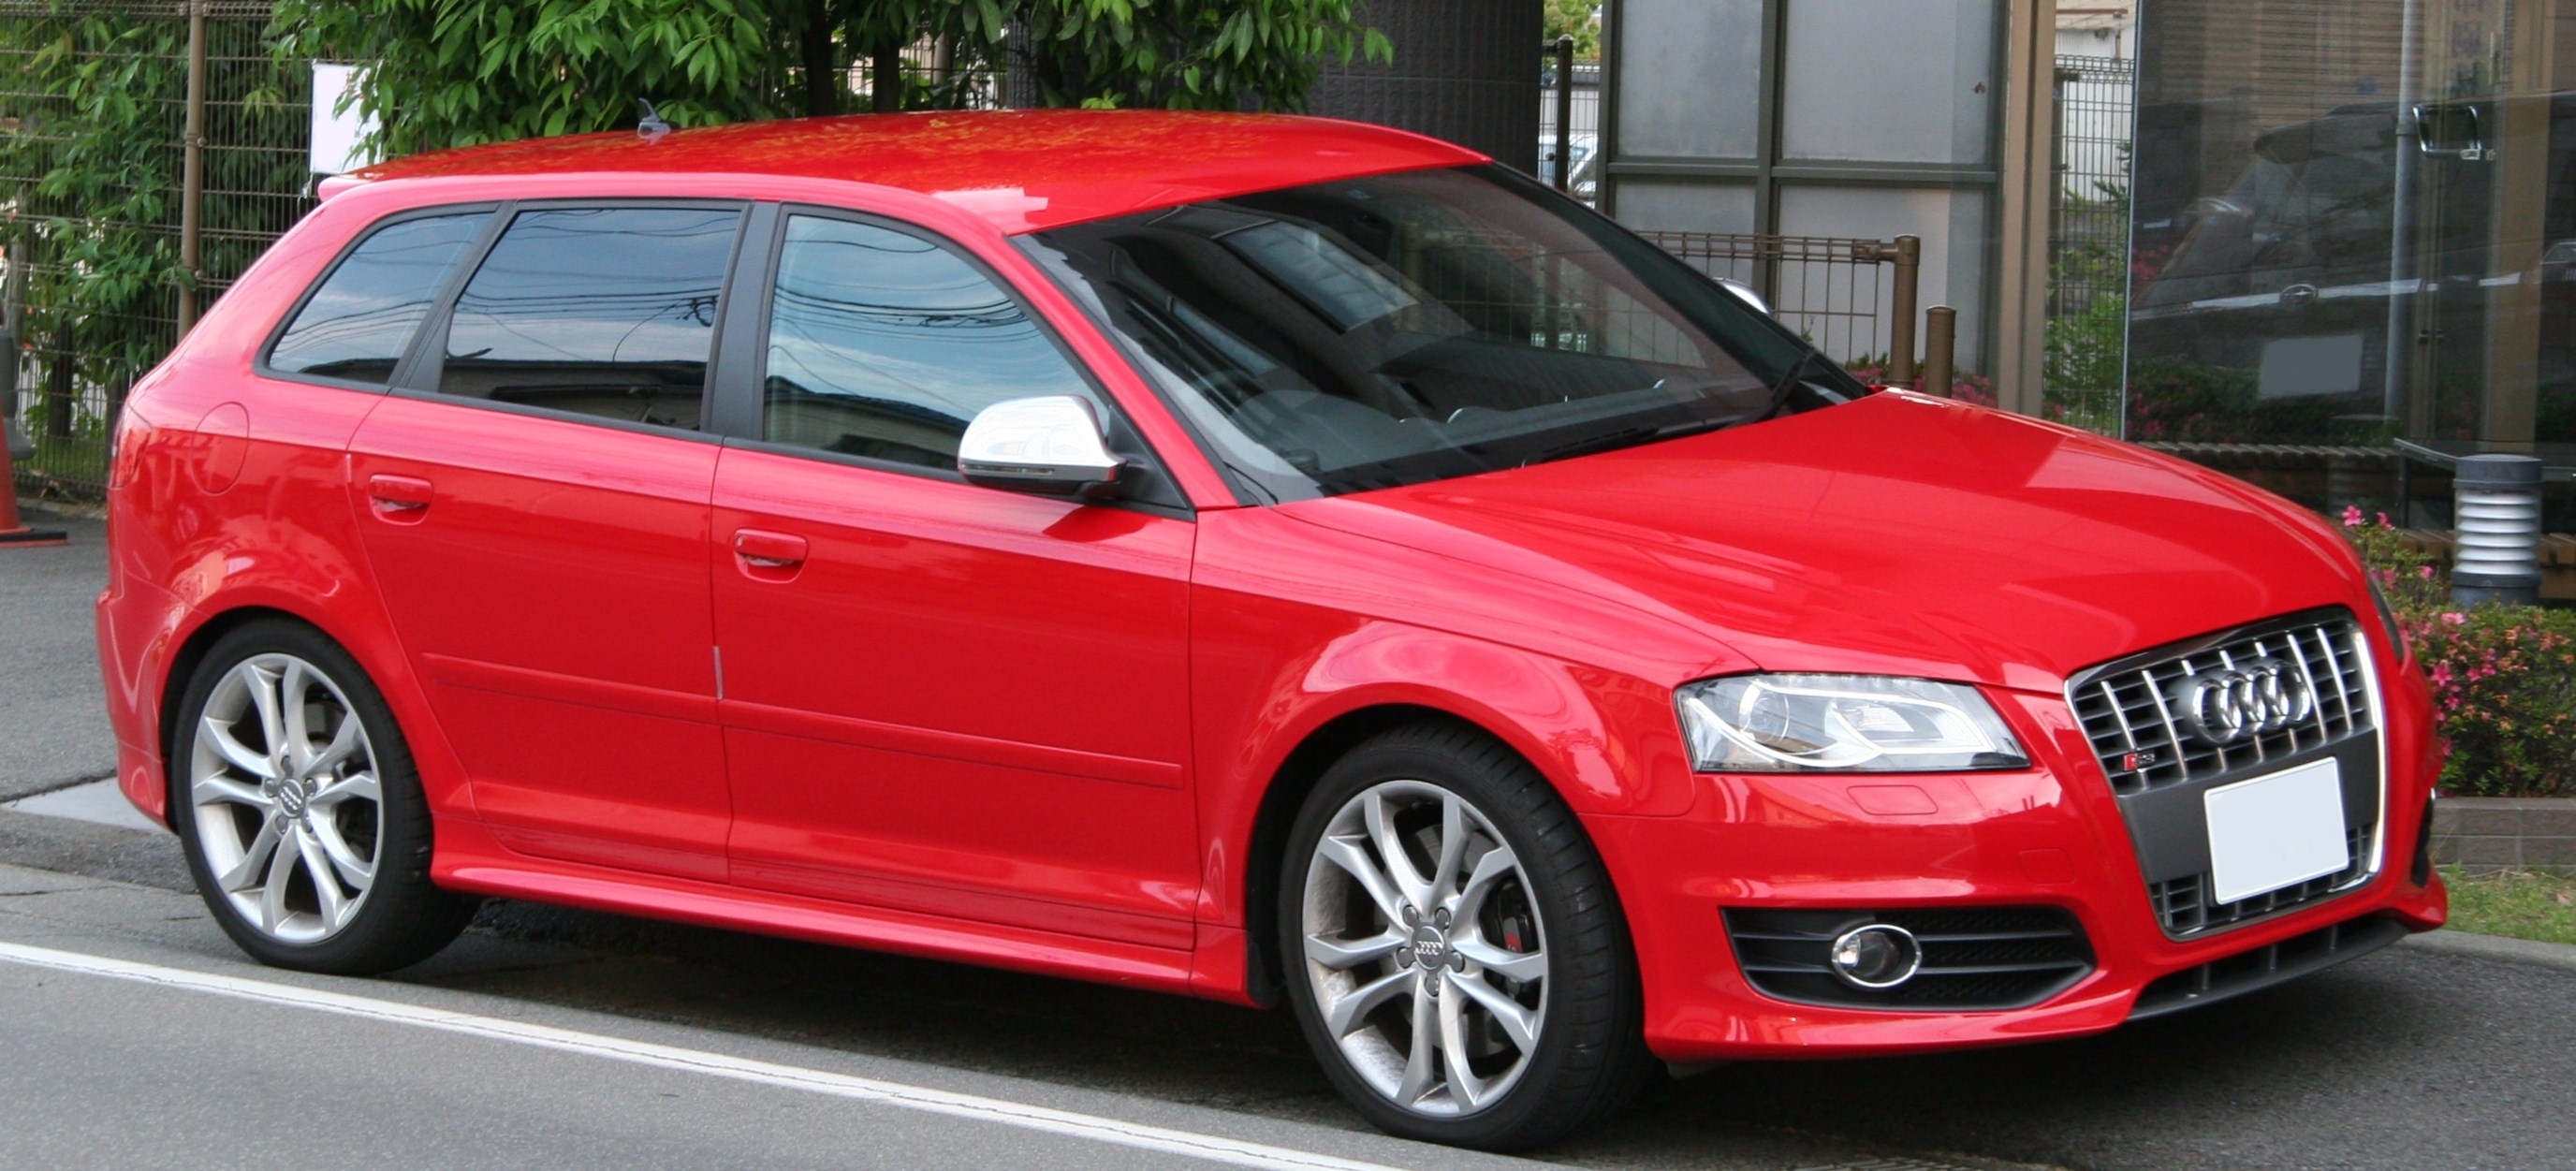 Fichier:2010 Audi A5 (8T) 3.0 TDI quattro Sportback 01.jpg — Wikipédia